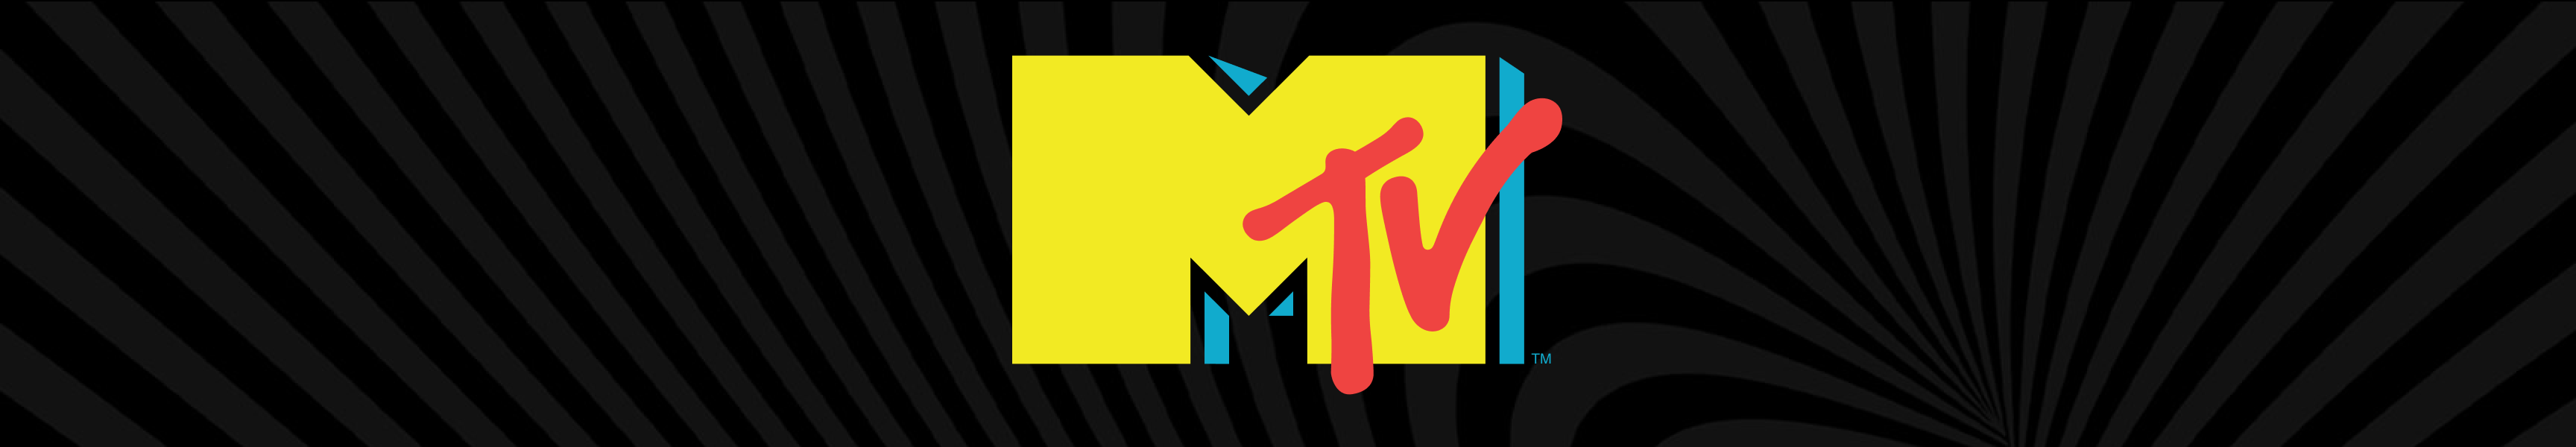 Serviettes MTV